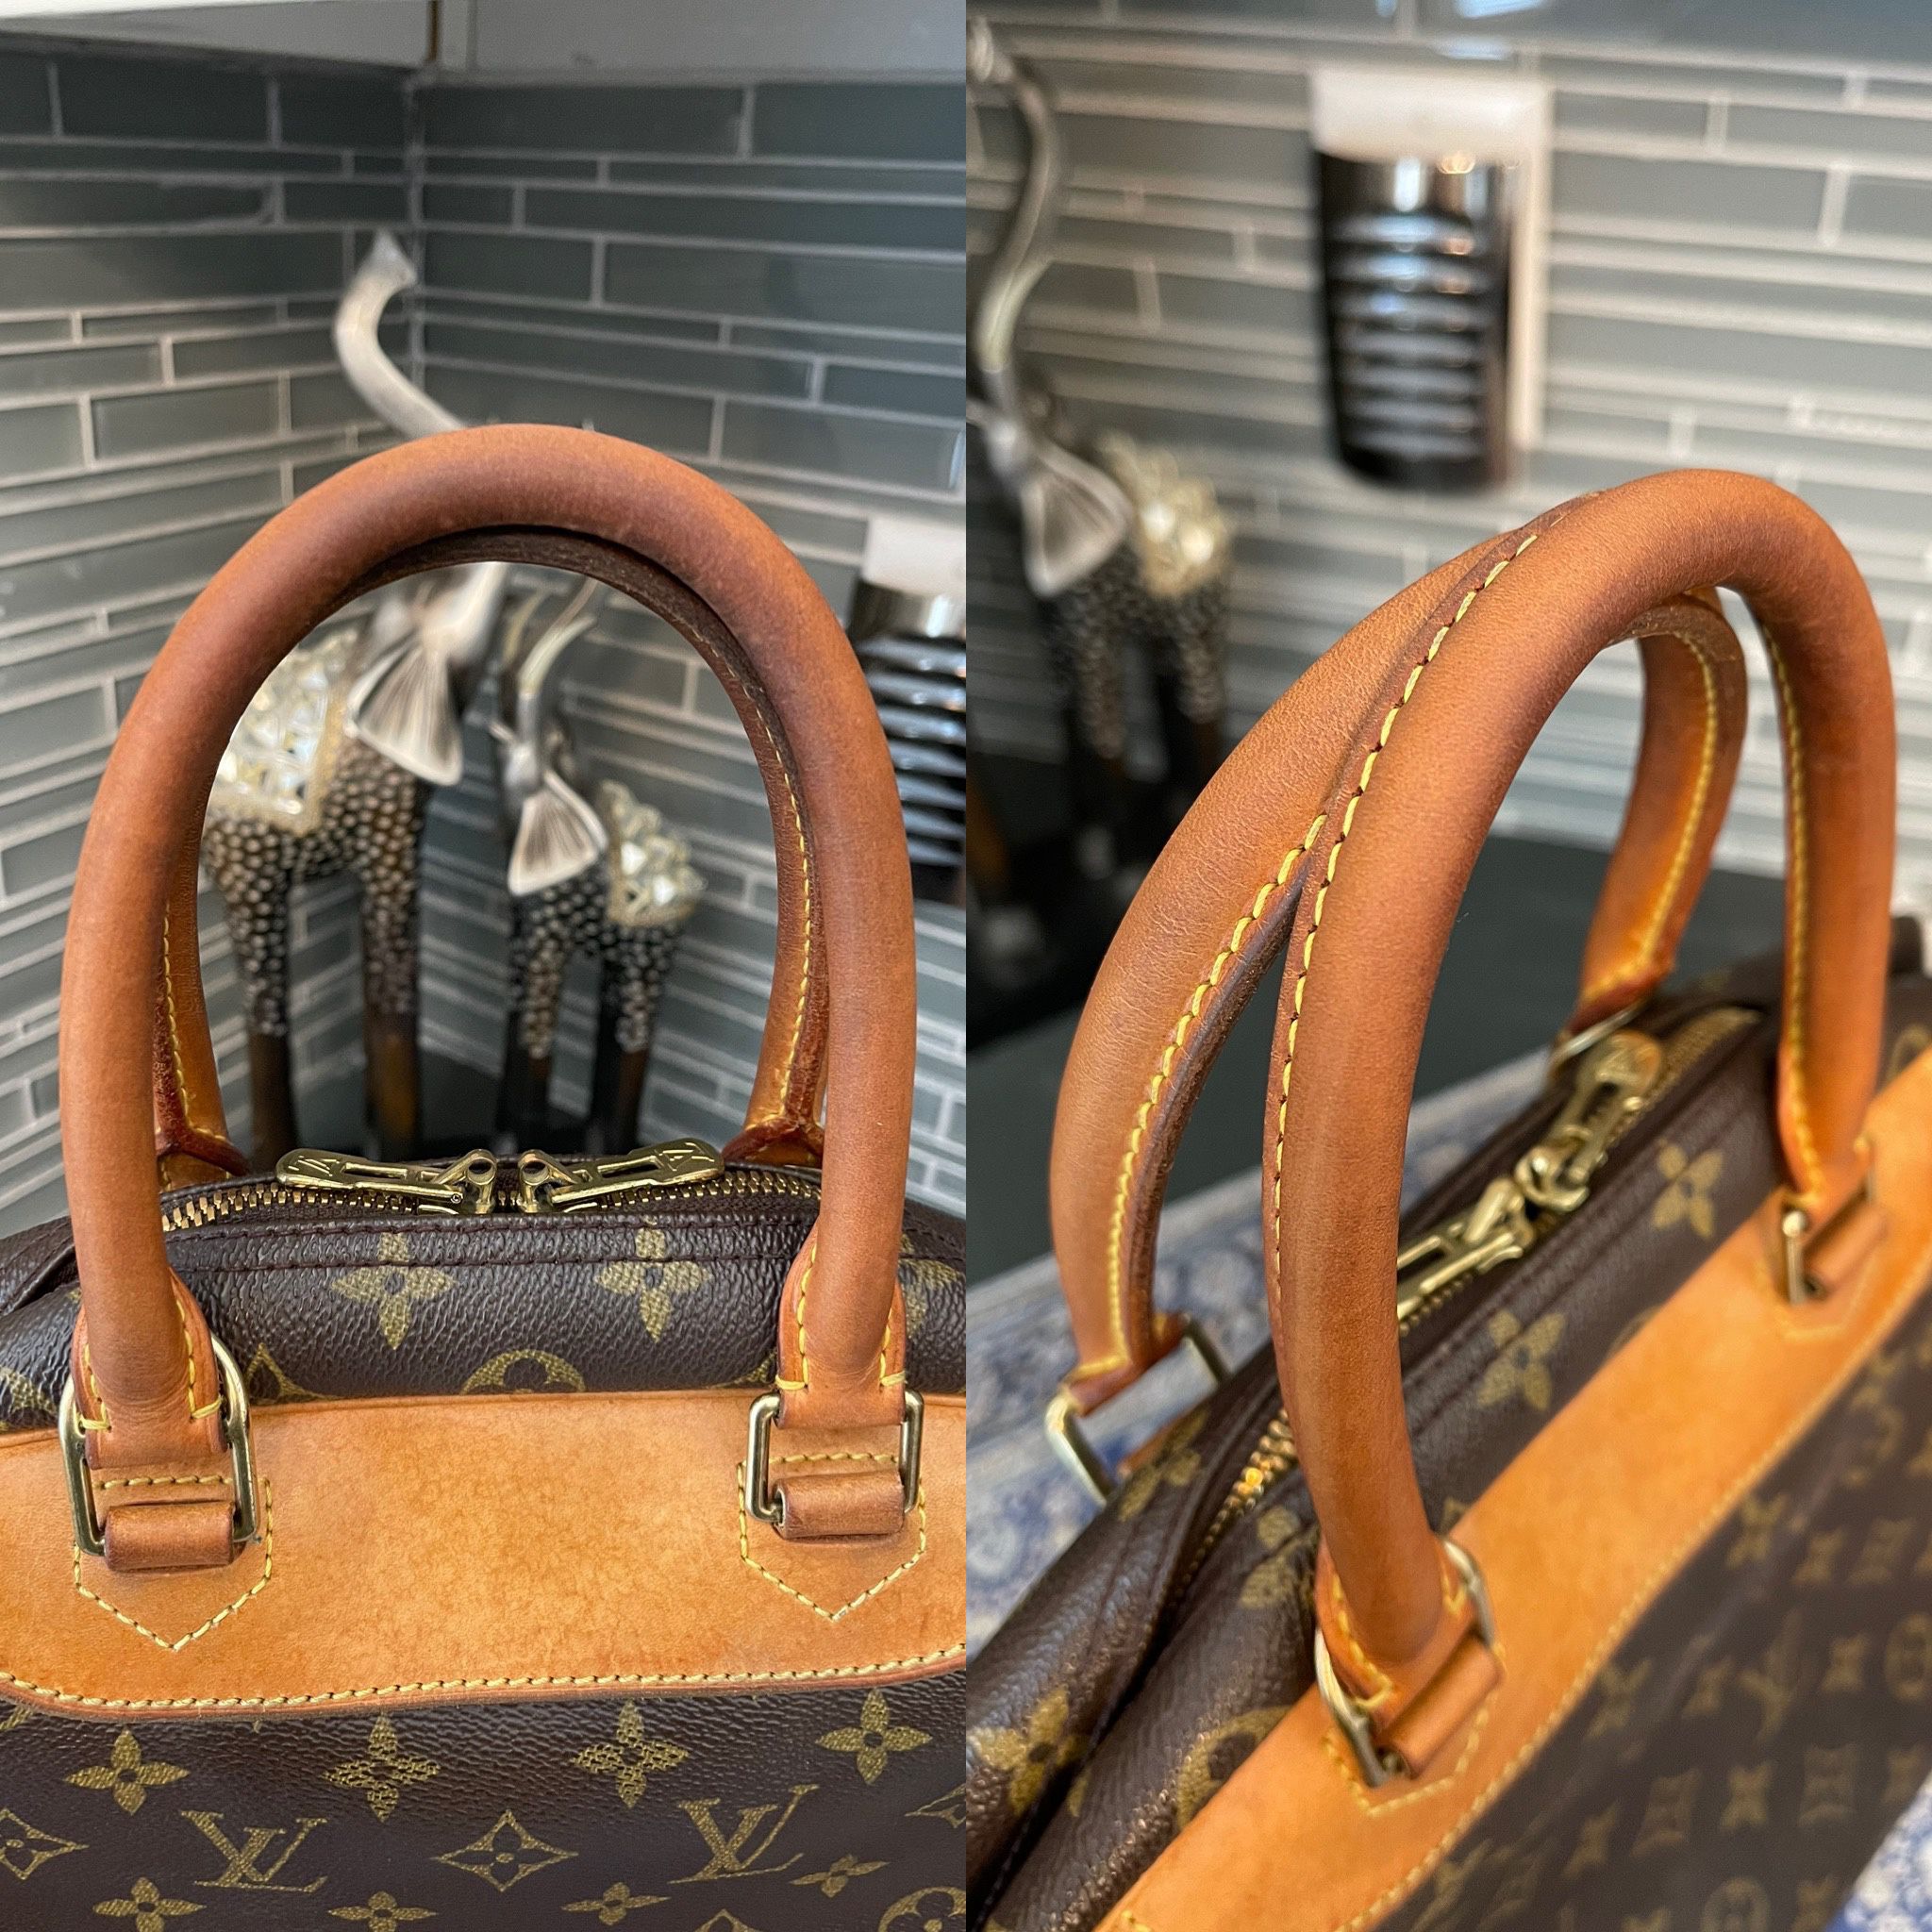 Louis Vuitton Deauville Monogram Handbag for Sale in Sunnyvale, CA